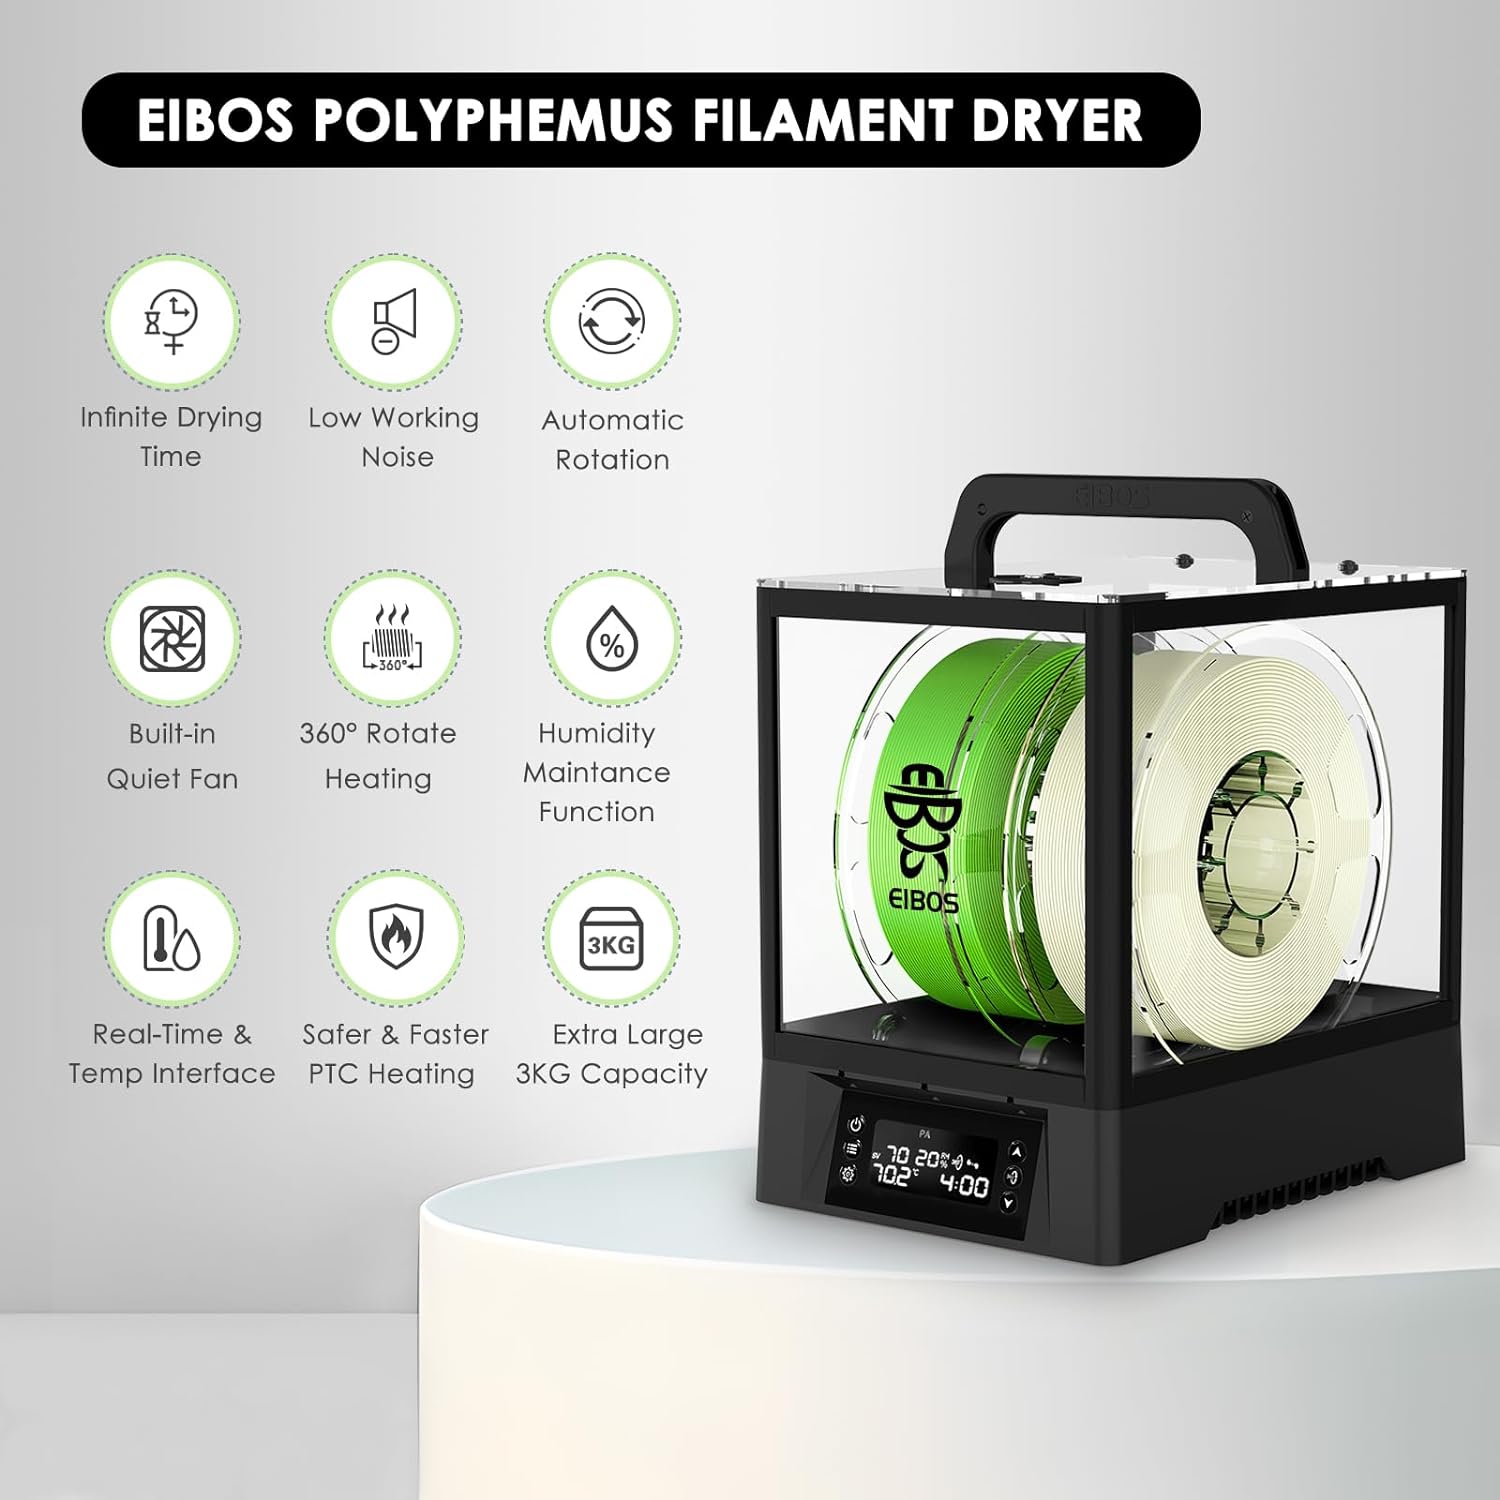 EIBOS Polyphemus Filament Dryer